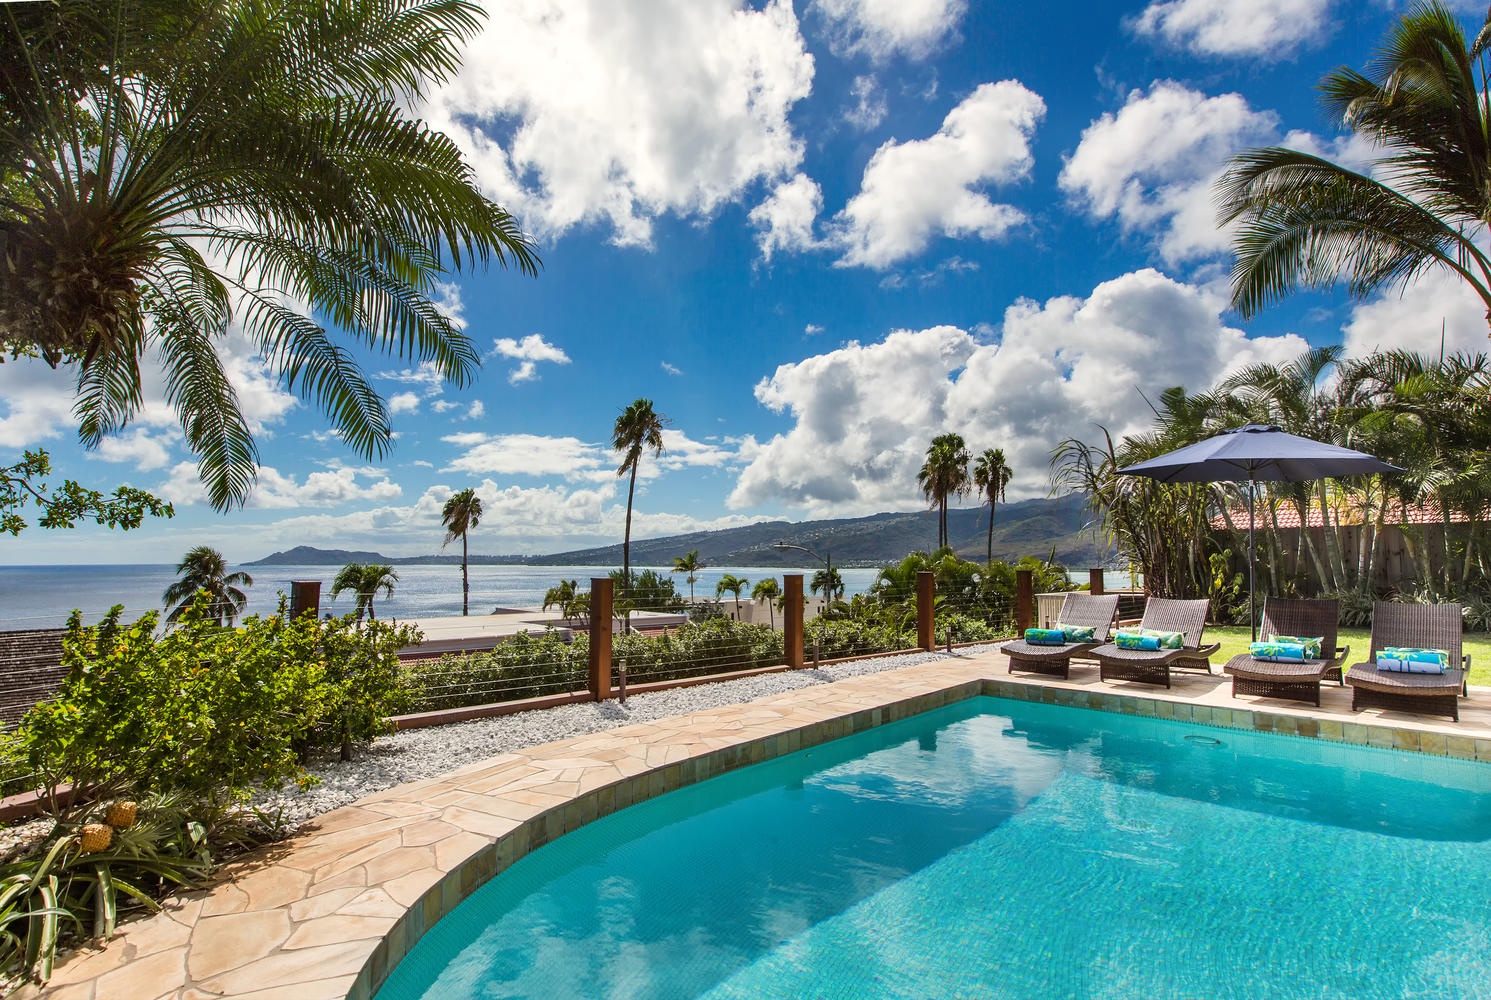 Honolulu Vacation Rentals, Aloha Nalu - Your oasis of fun and serenity.